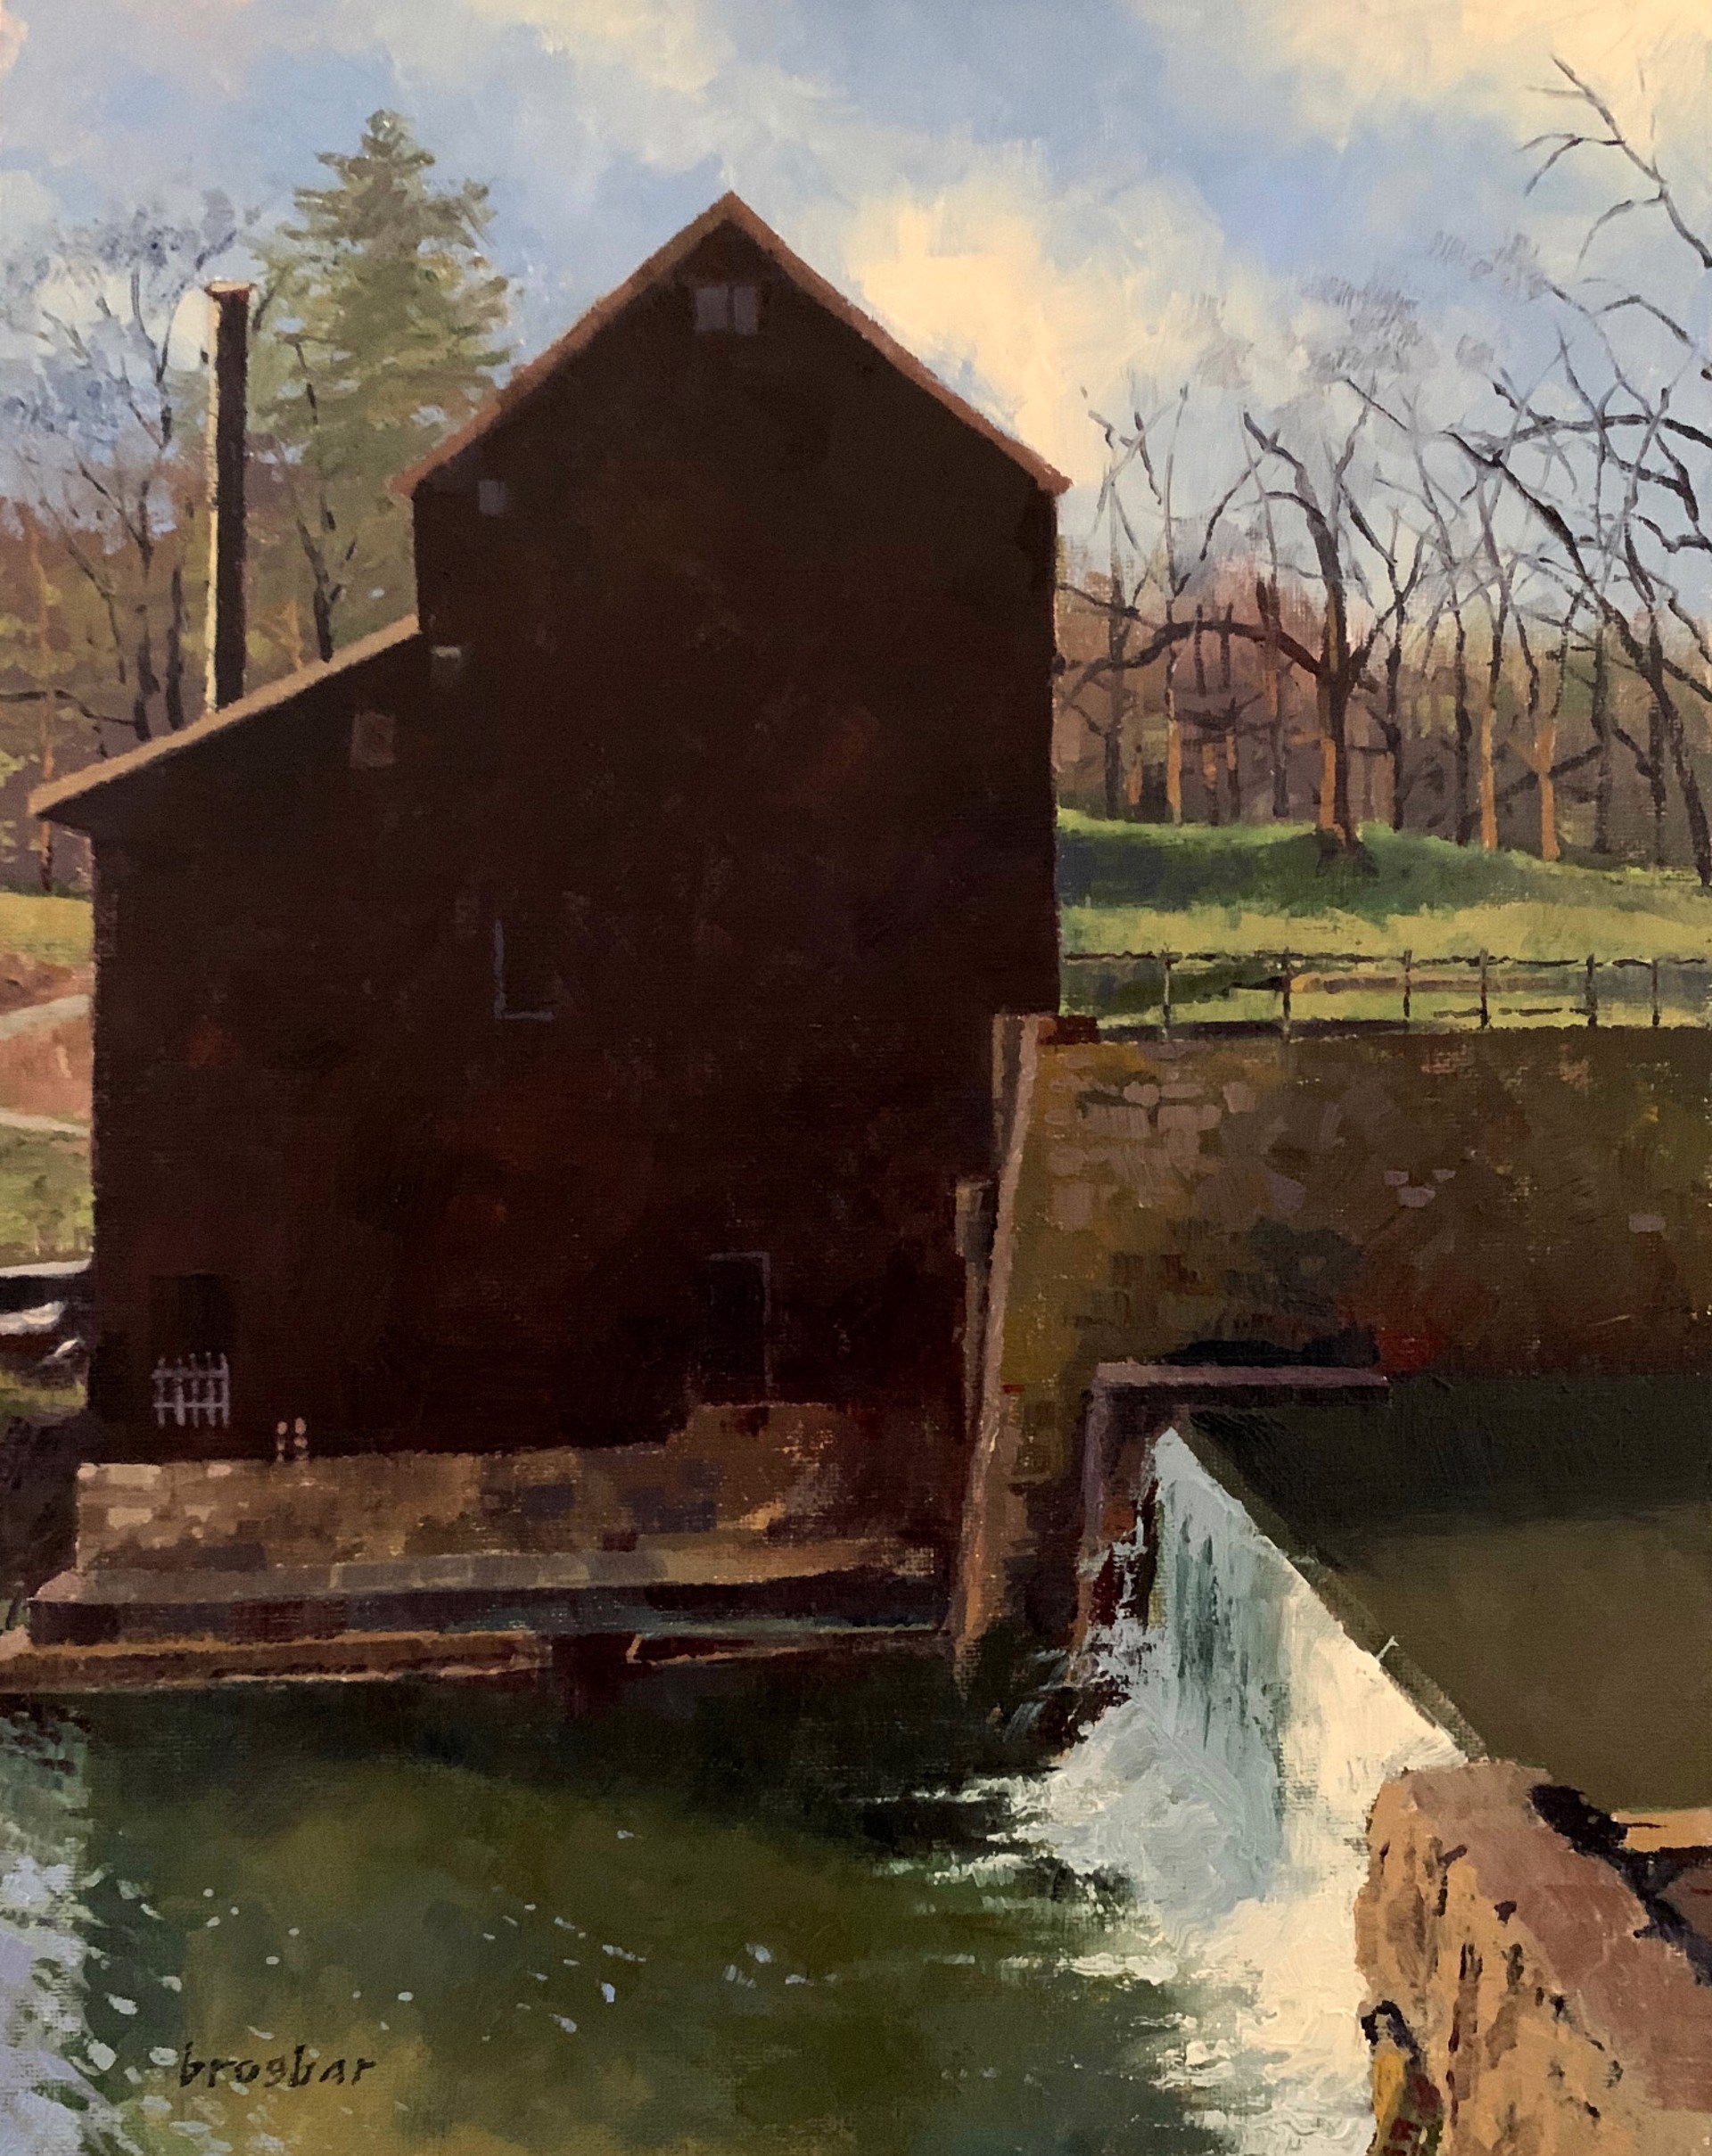 Michael Broshar "Pine Creek Grist Mill" by Oil Painters of America